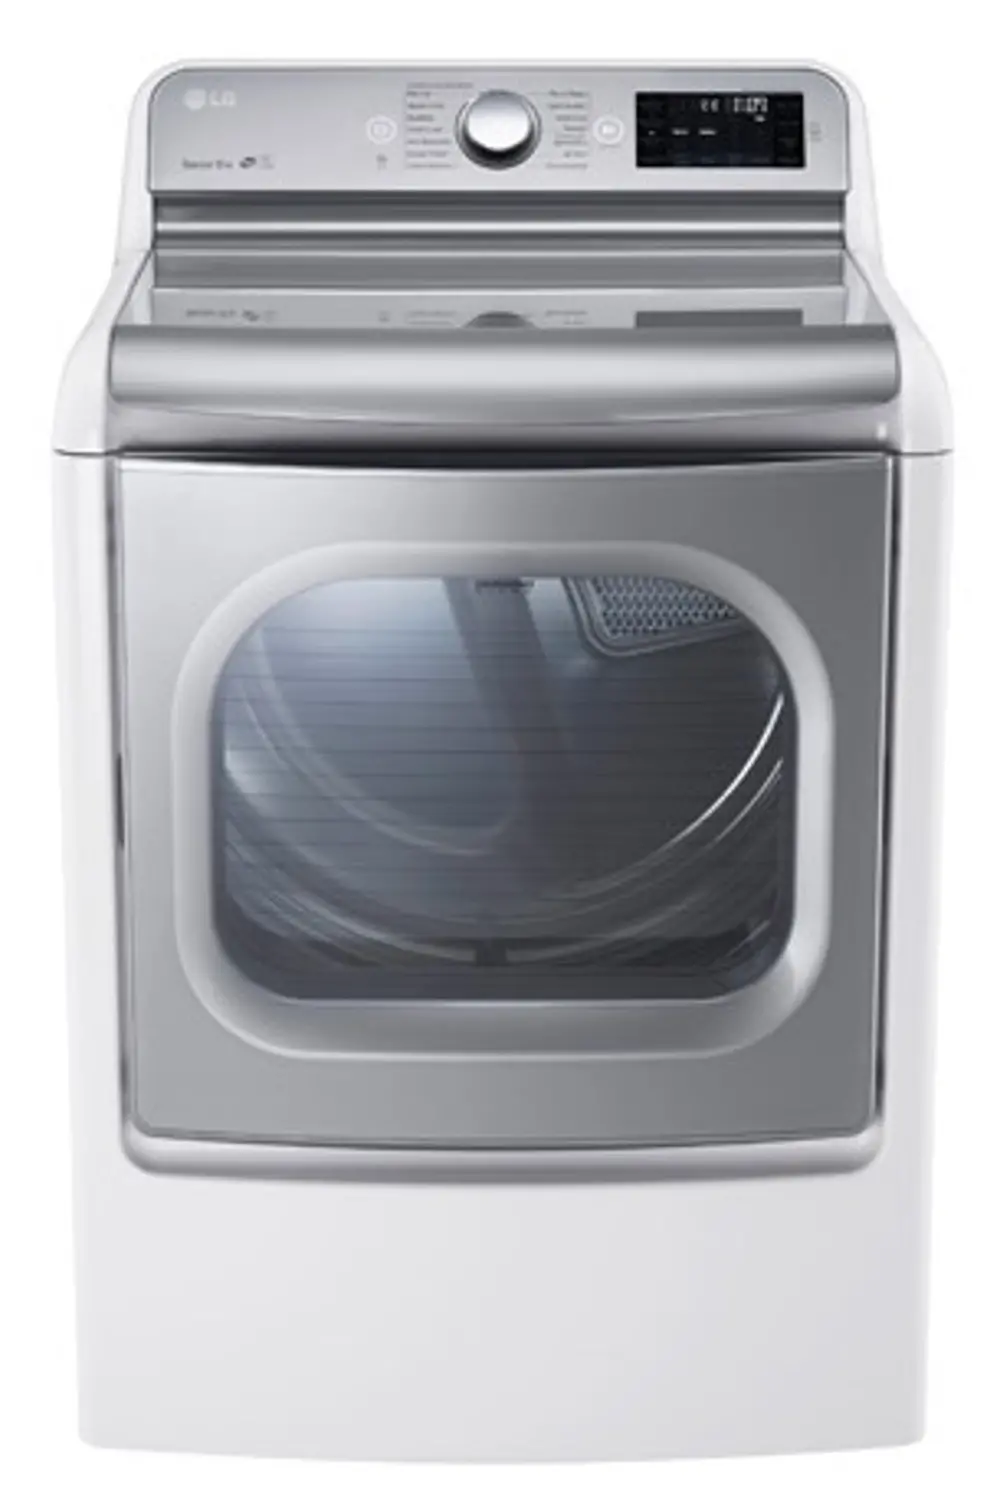 DLGX7701WE LG Gas Dryer - White 9.0 cu. ft.-1